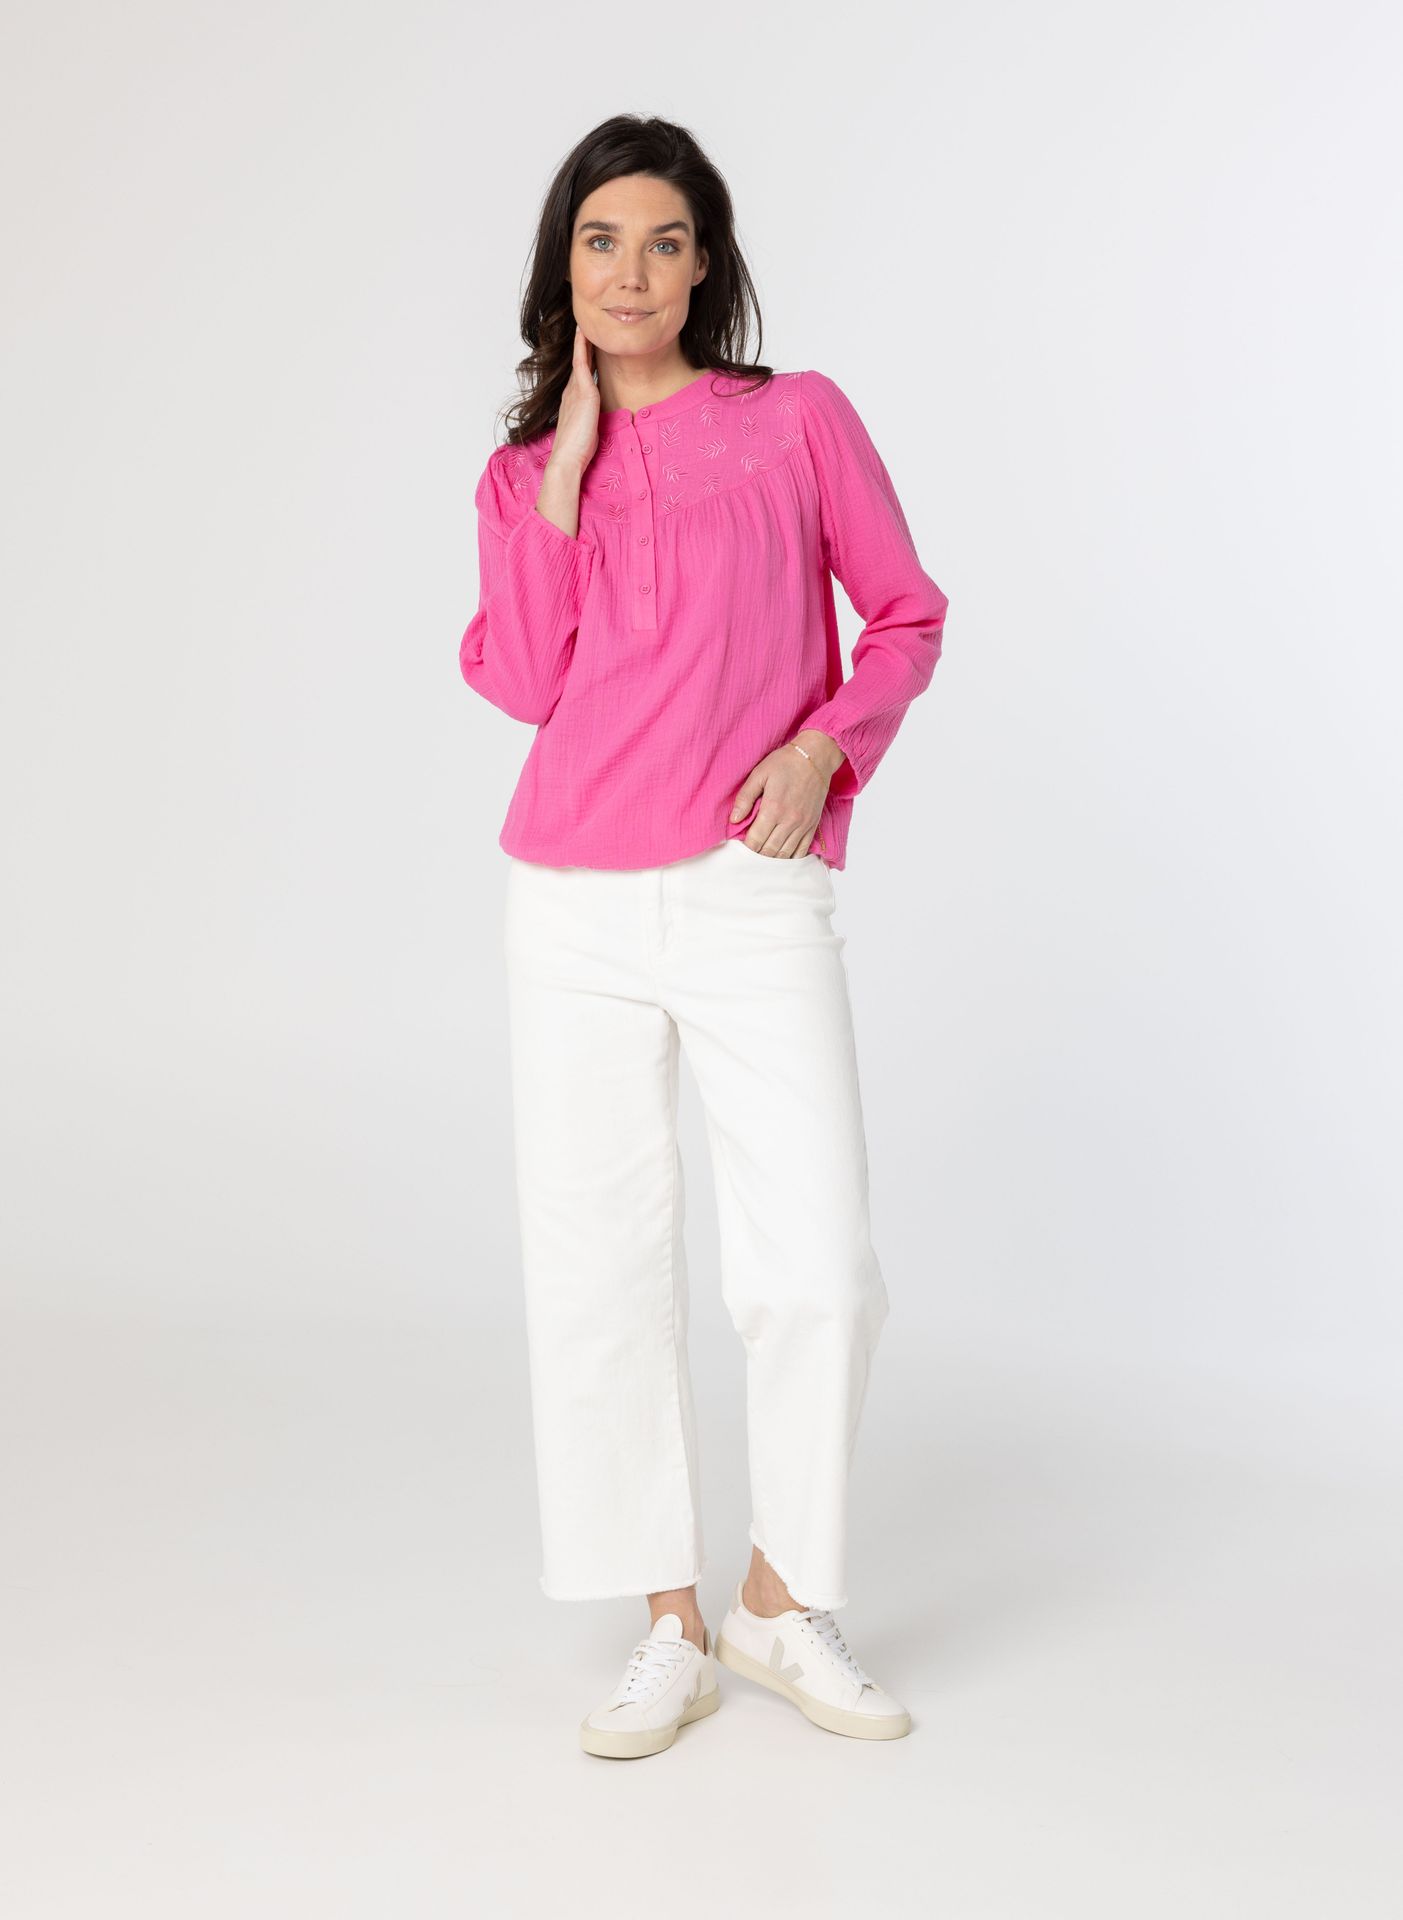 Norah Roze blouse van katoen pink 213404-900